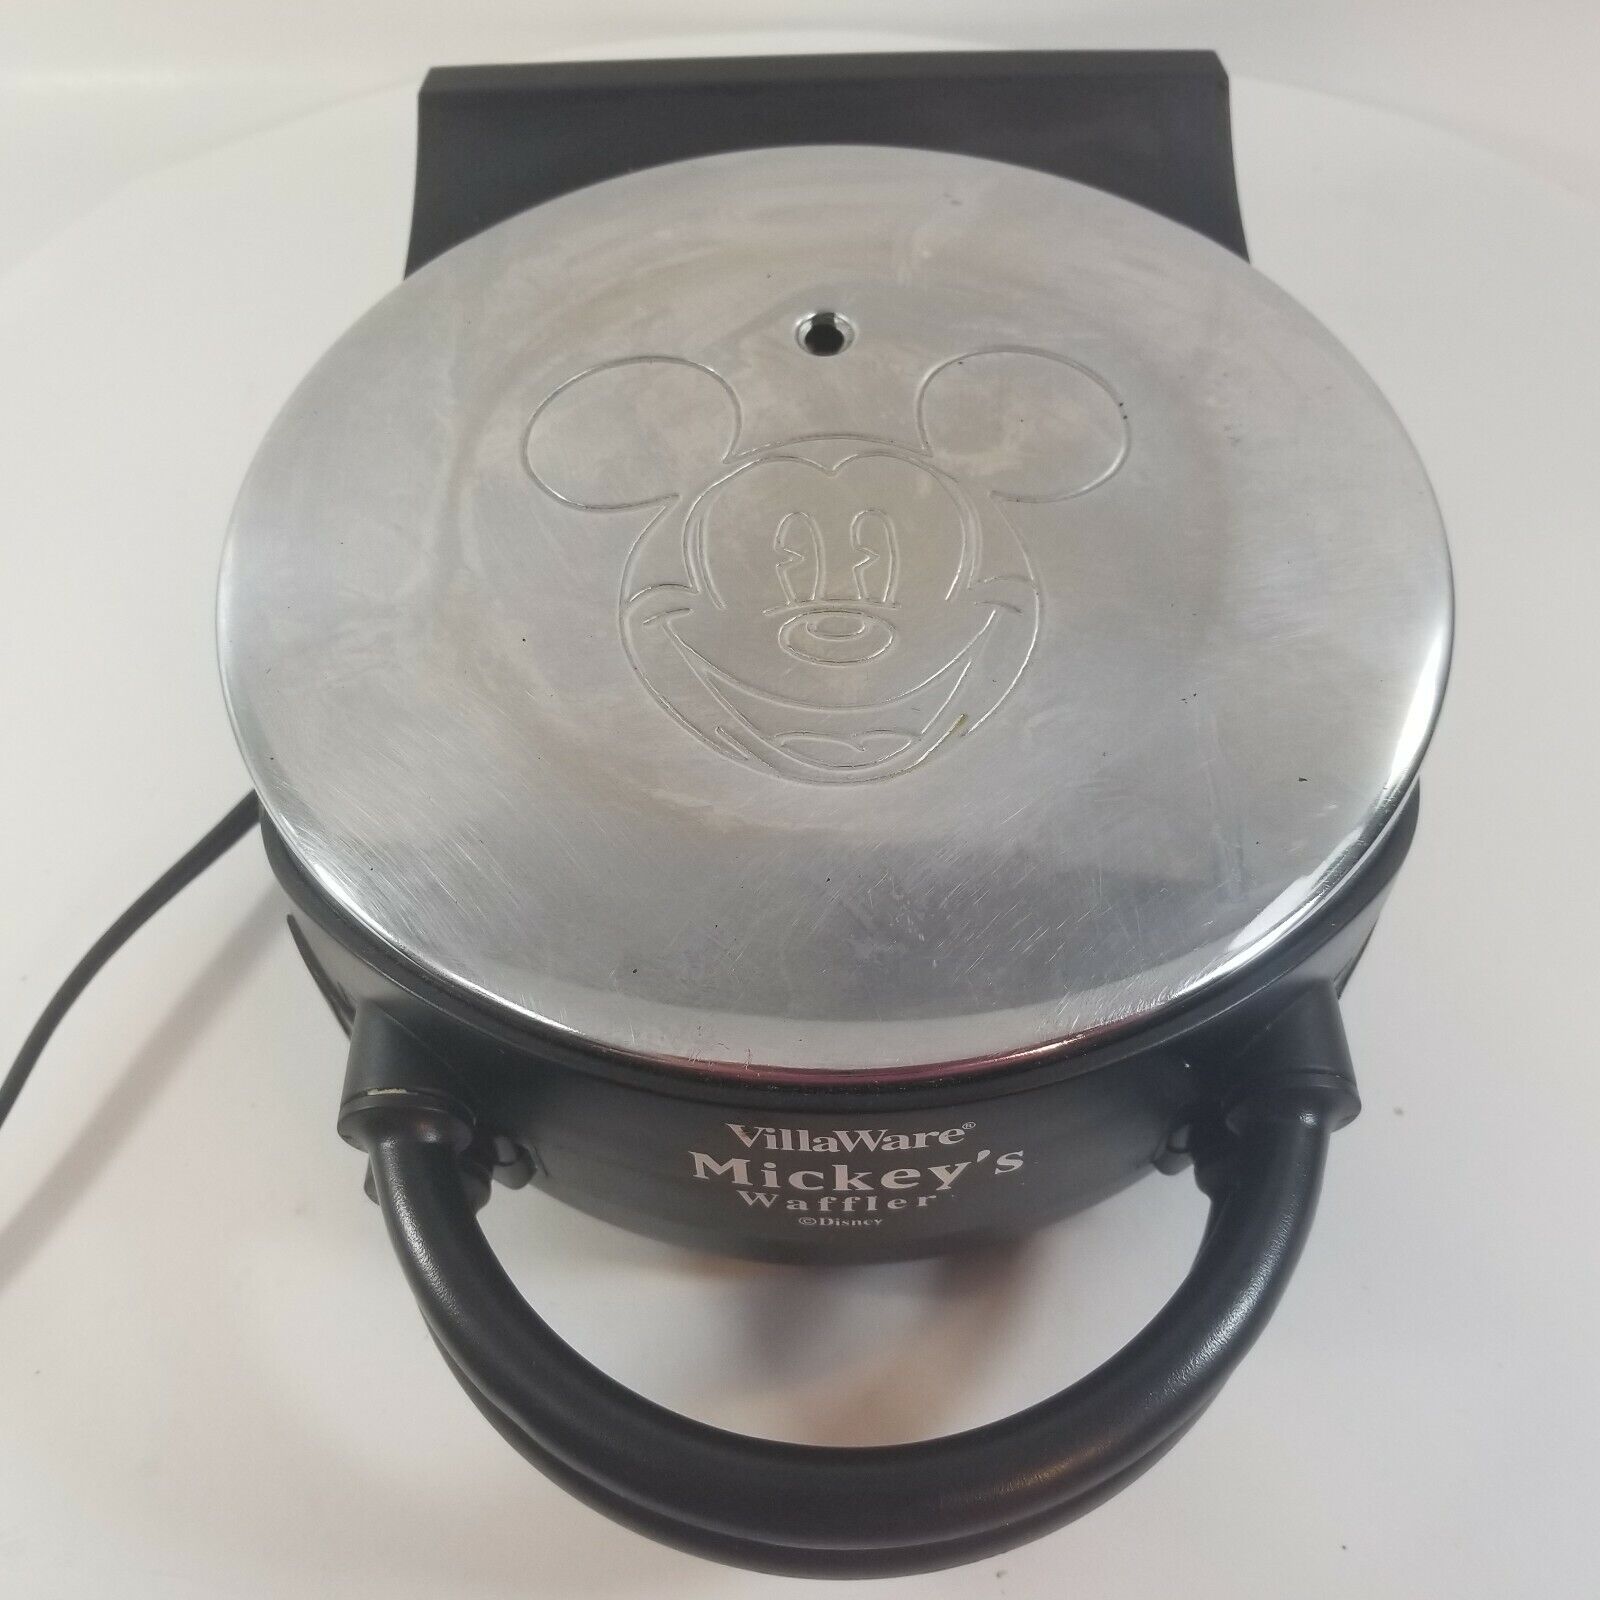 Villaware Mickey's Waffler Mickey Mouse Single Waffle Maker Model 5555-01 Disney